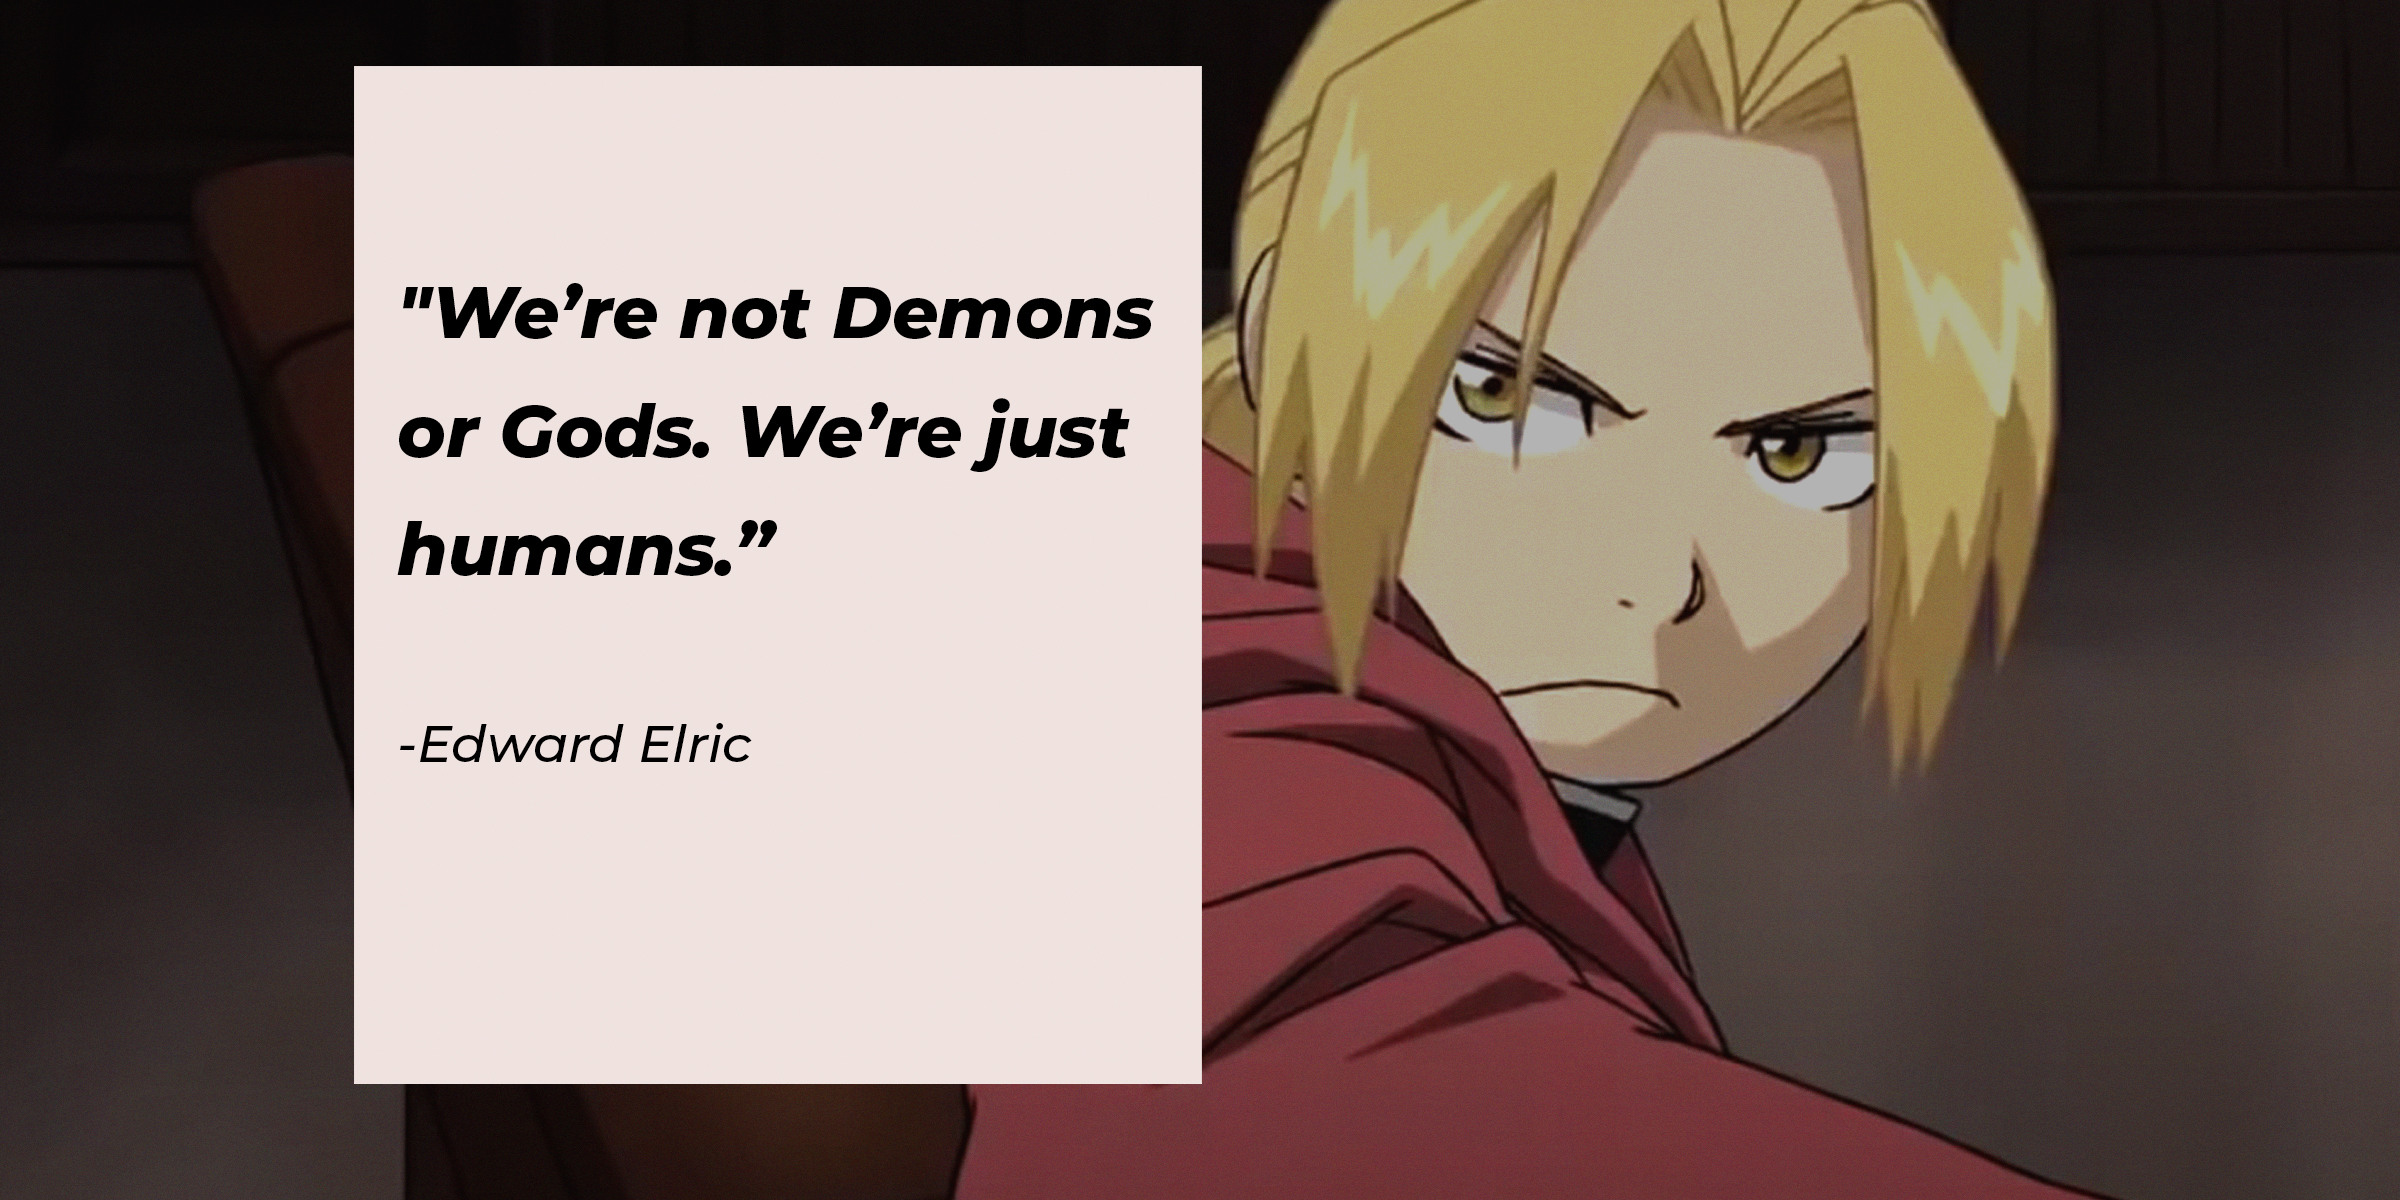 Edward Elric's quote: "We’re not Demons or Gods. We’re just humans.” | Image: facebook.com/FMAHiromuArakawa